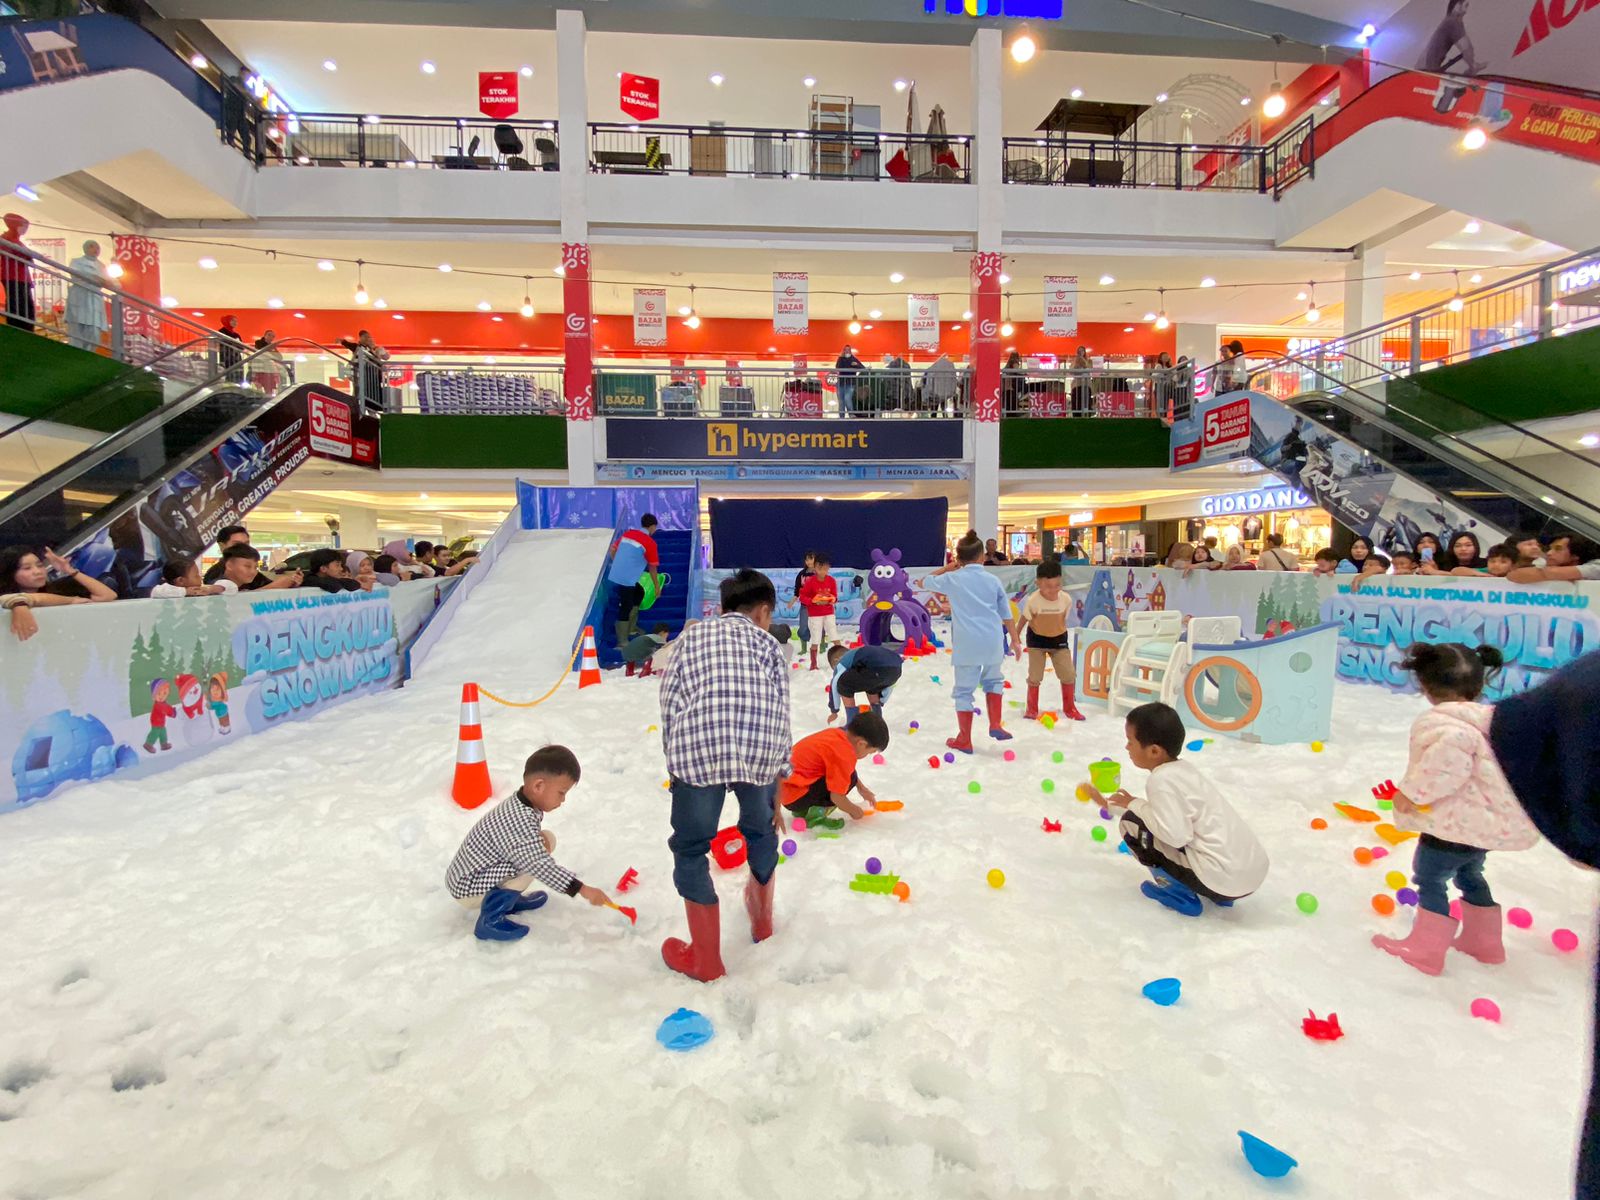 Wahana Salju Terbesar Snowland Hadir di Bencoolen Mall, Ini Daftar Harga Tiketnya